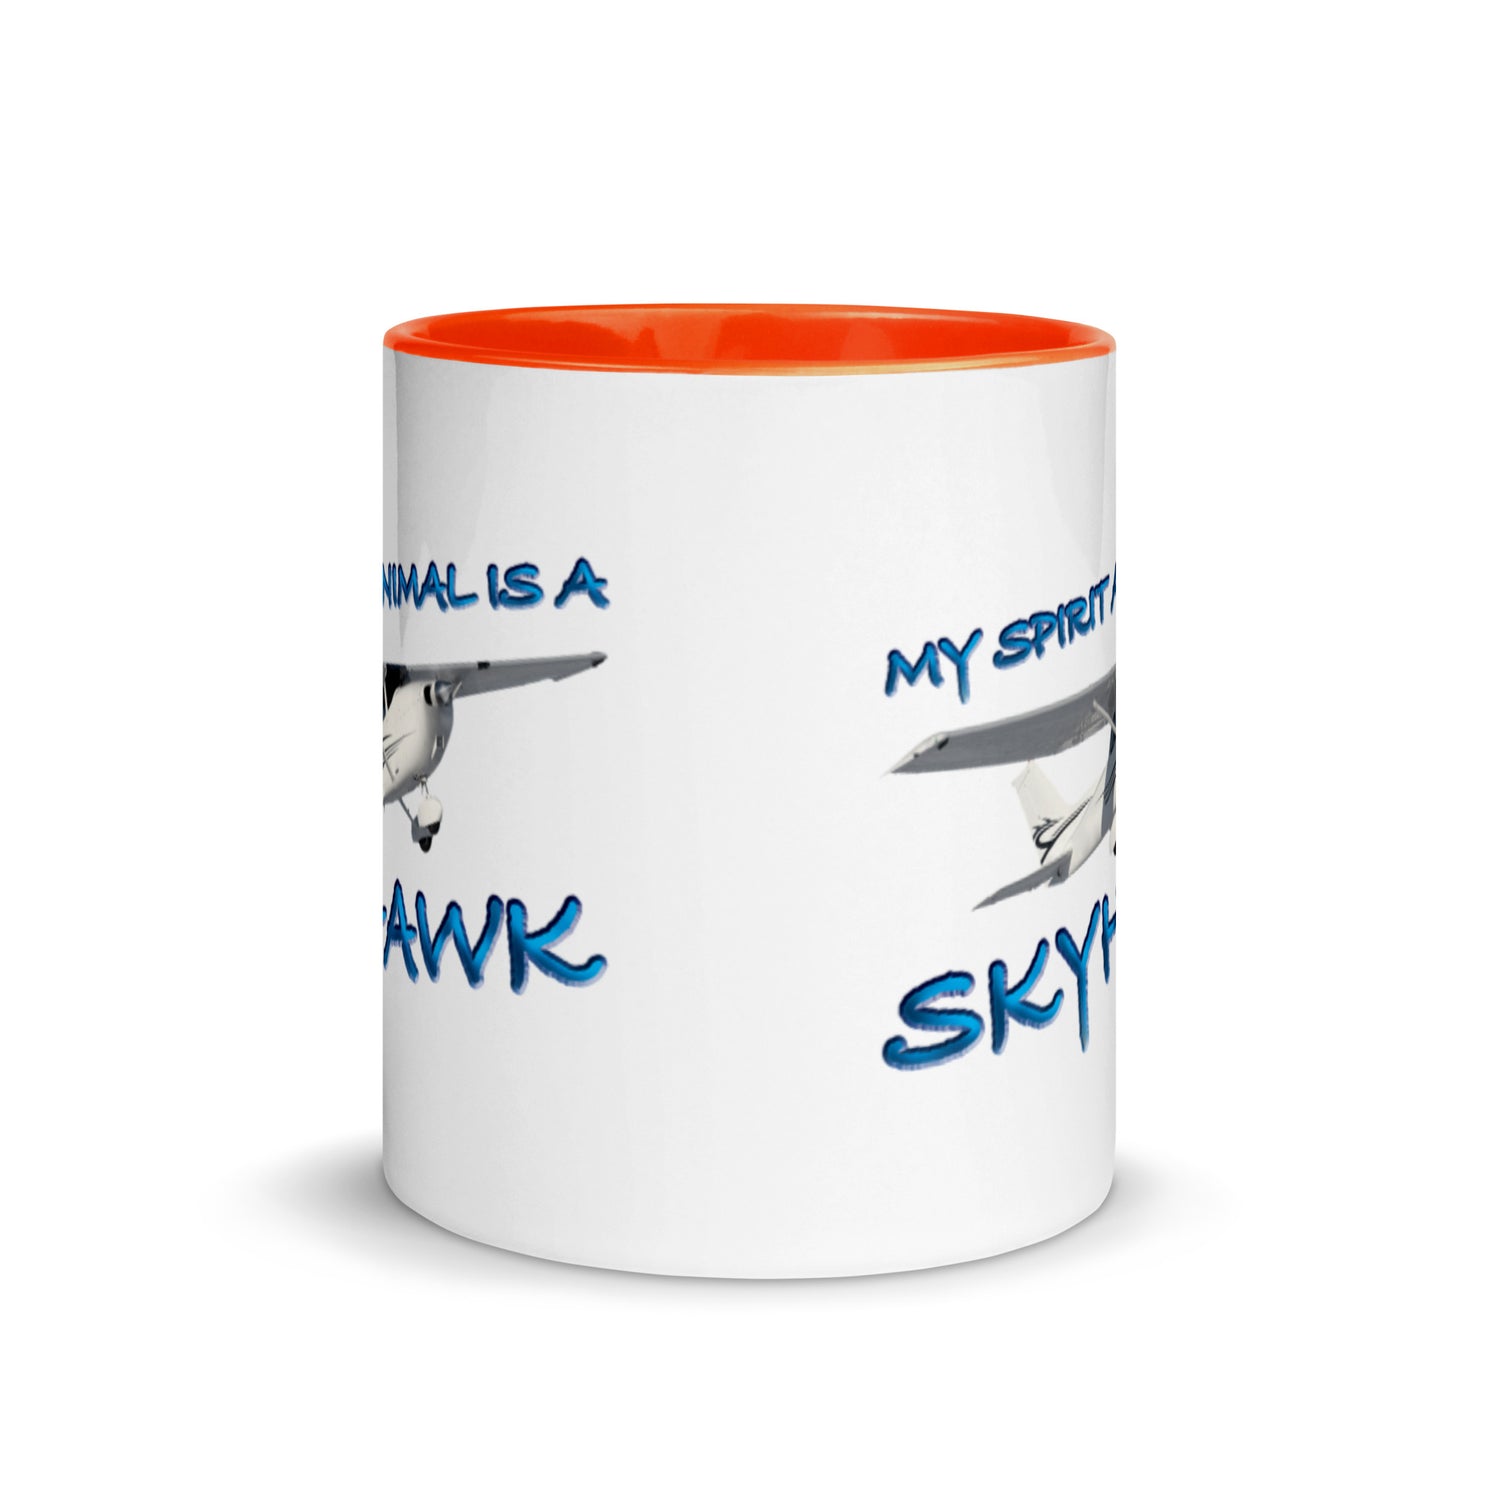 My Spirit Animal is a Skyhawk 11 oz. mug with color inside (blue)